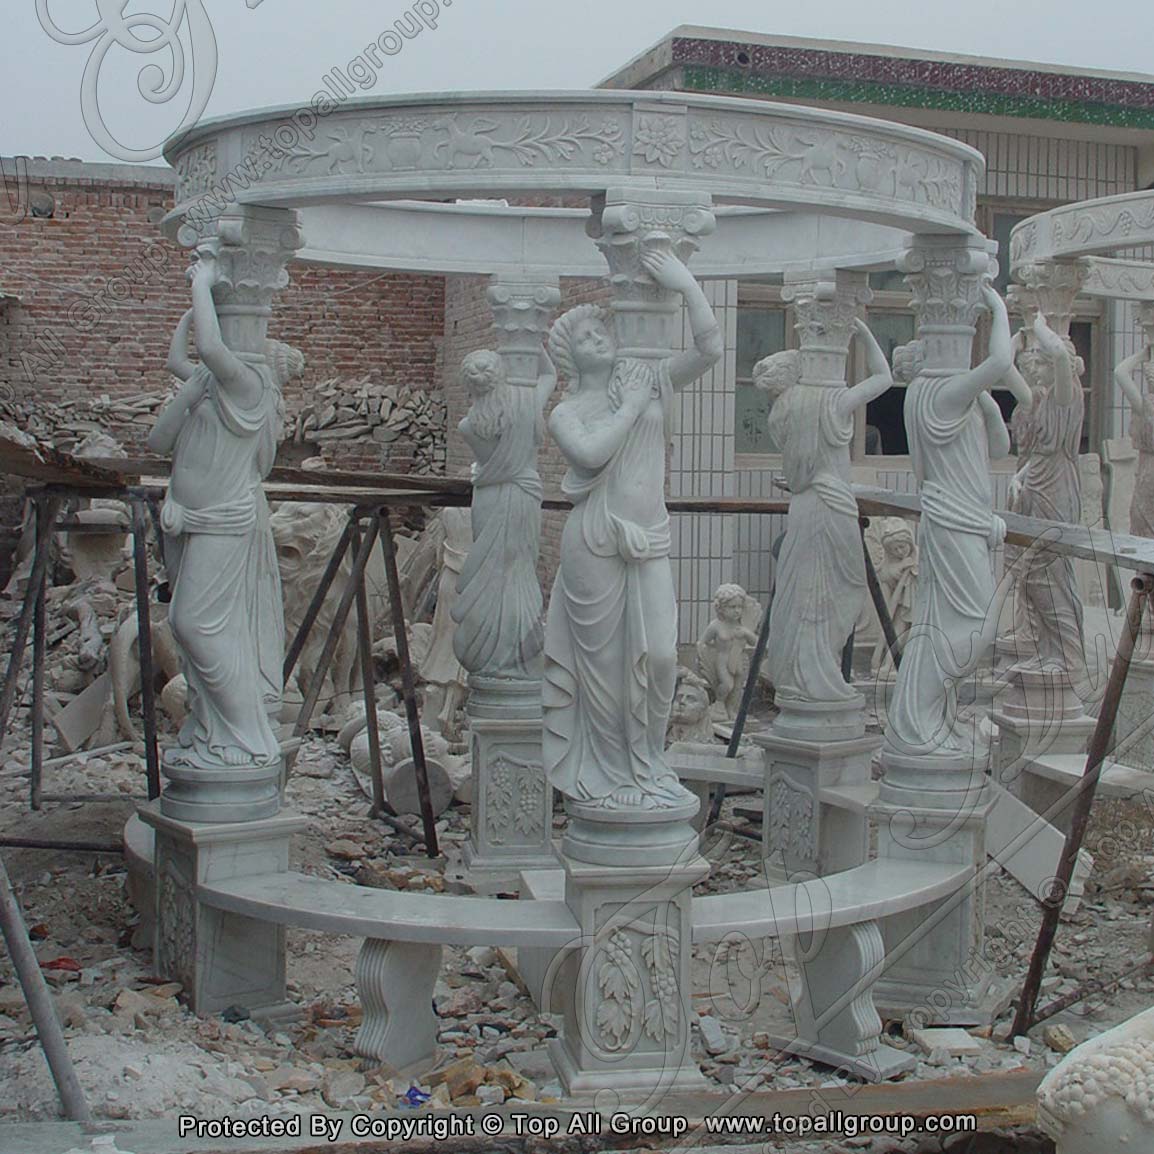 Gazebo With Roman Female Sculpture